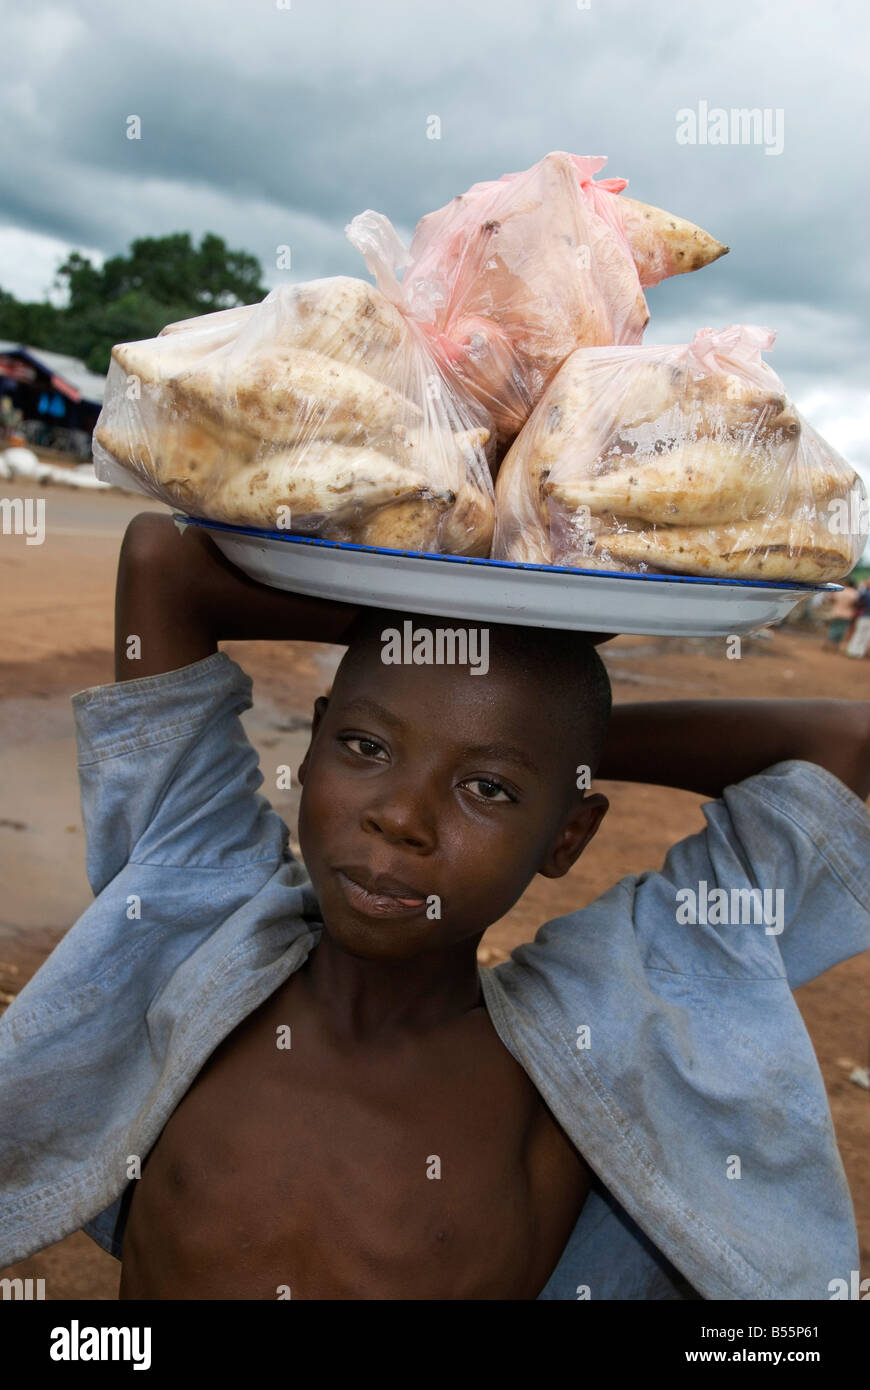 Sierra Leone road Makeni to Freetown. Ibrahim, young boy , selling potatoes Stock Photo